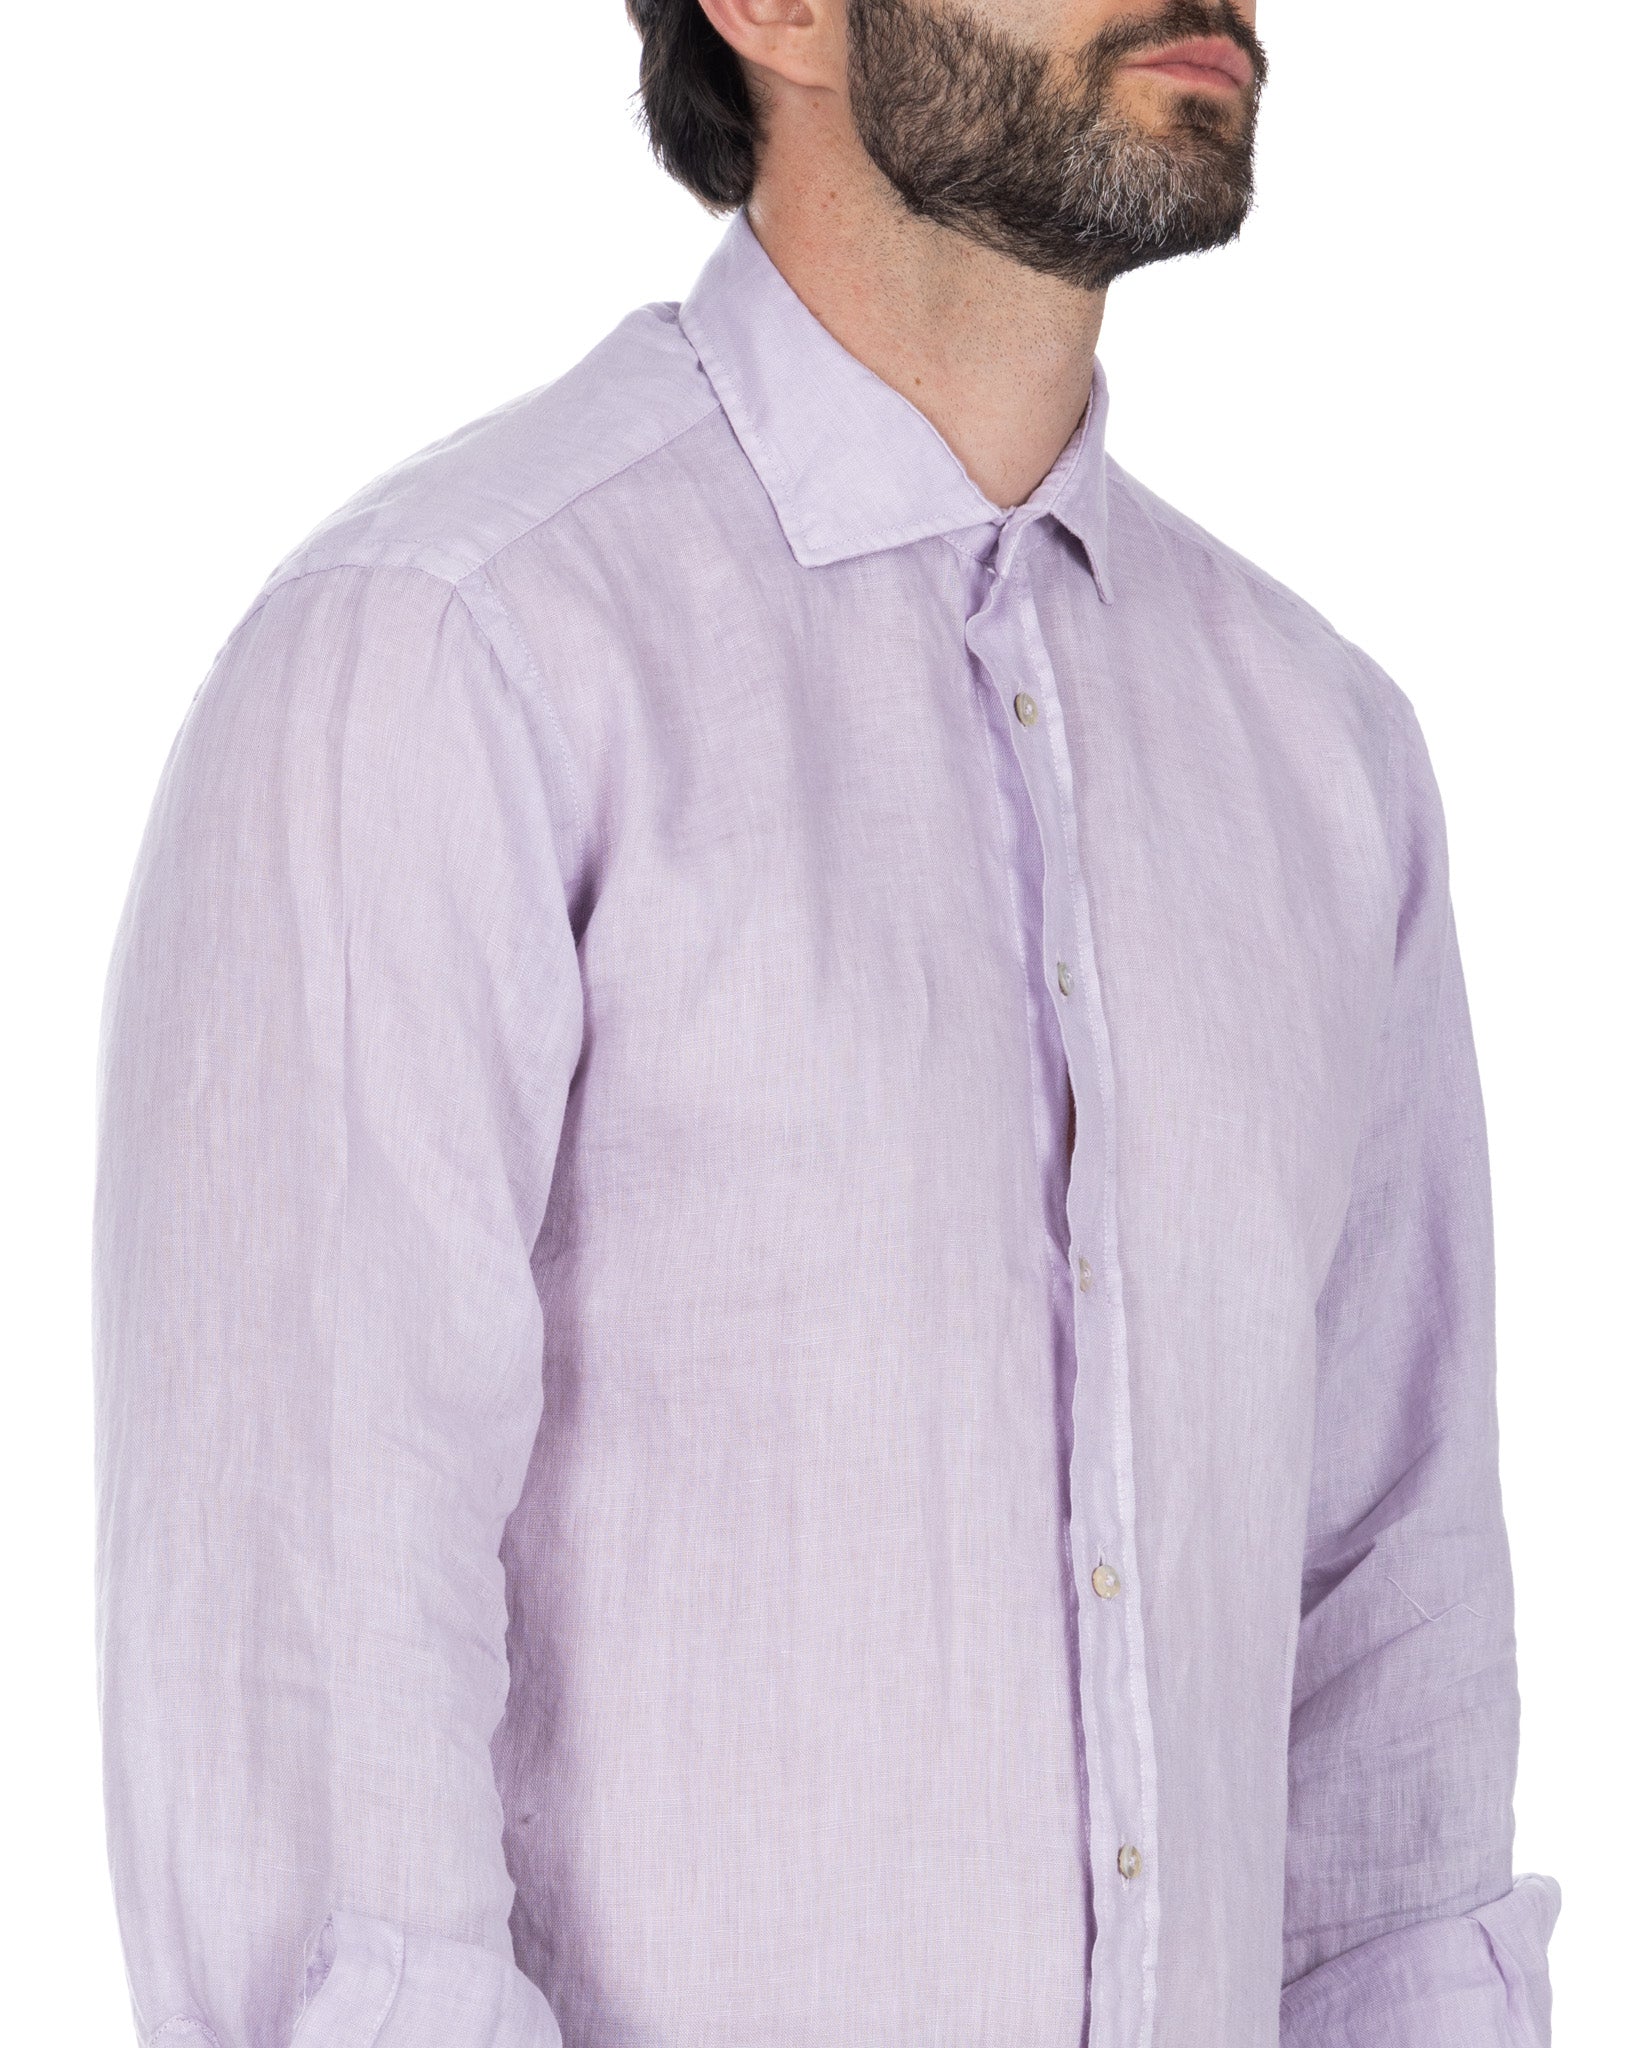 Montecarlo - lilac pure linen shirt